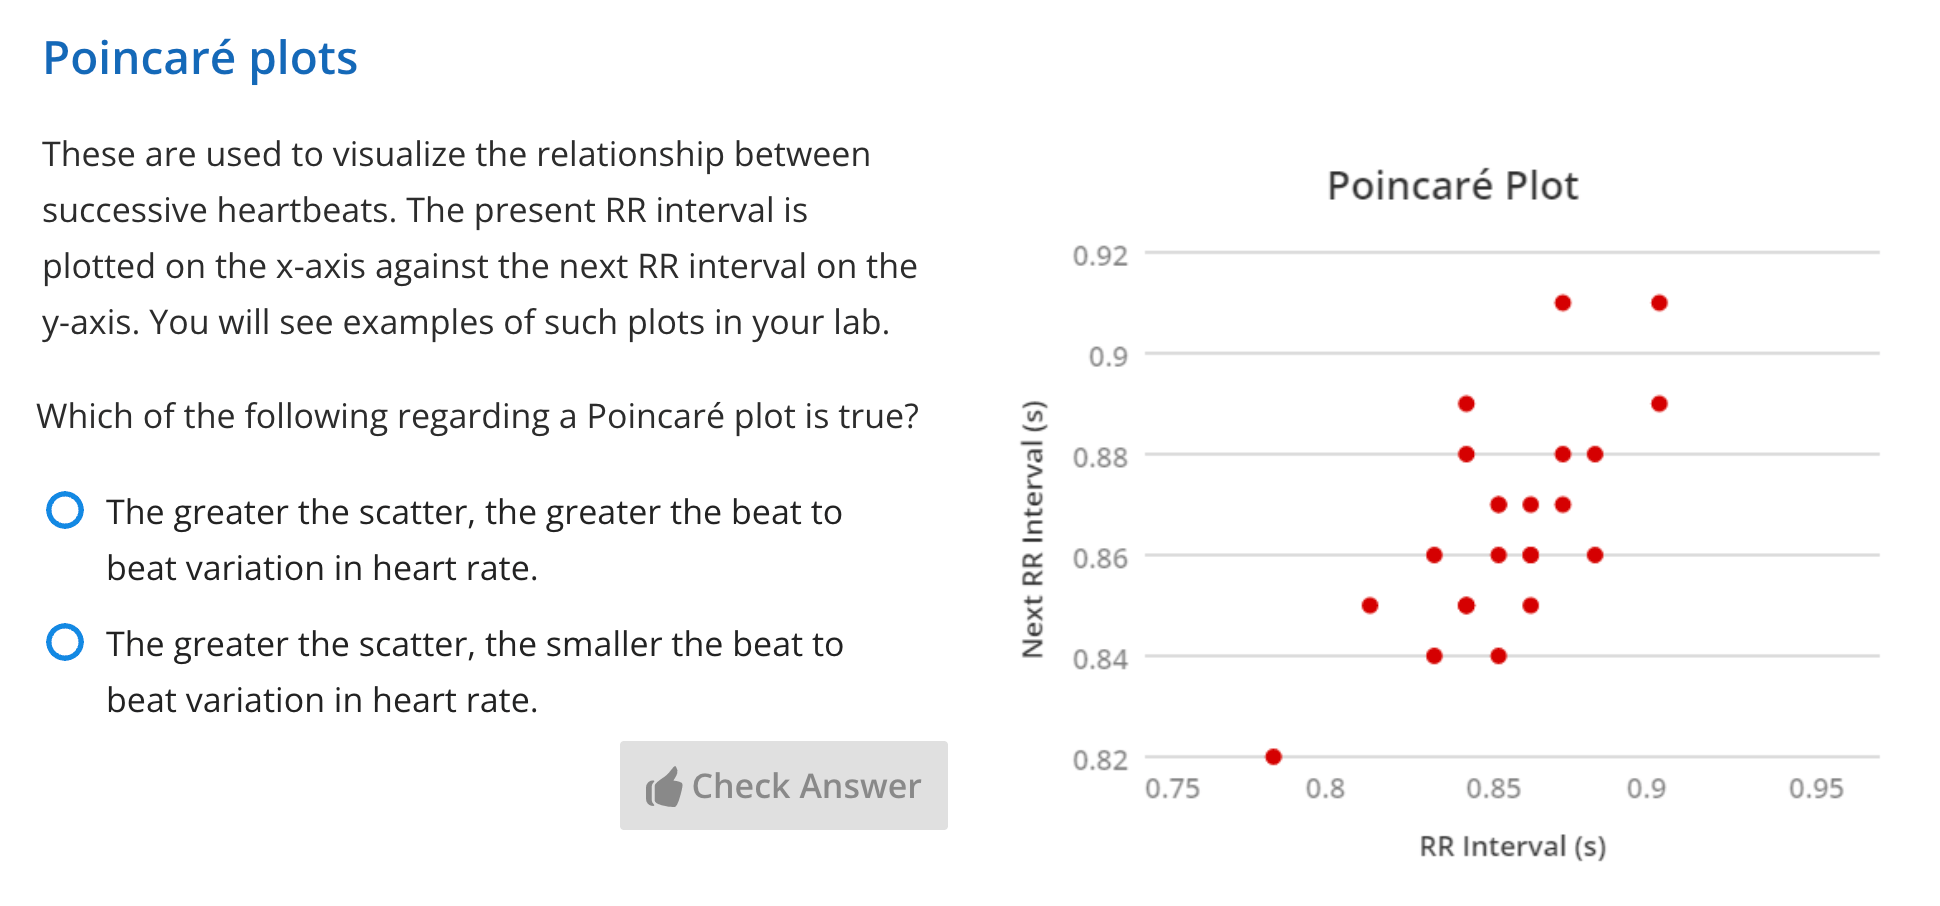 Text and a multiple-choice question on Poincaré plots. An example Poincaré plot is shown.